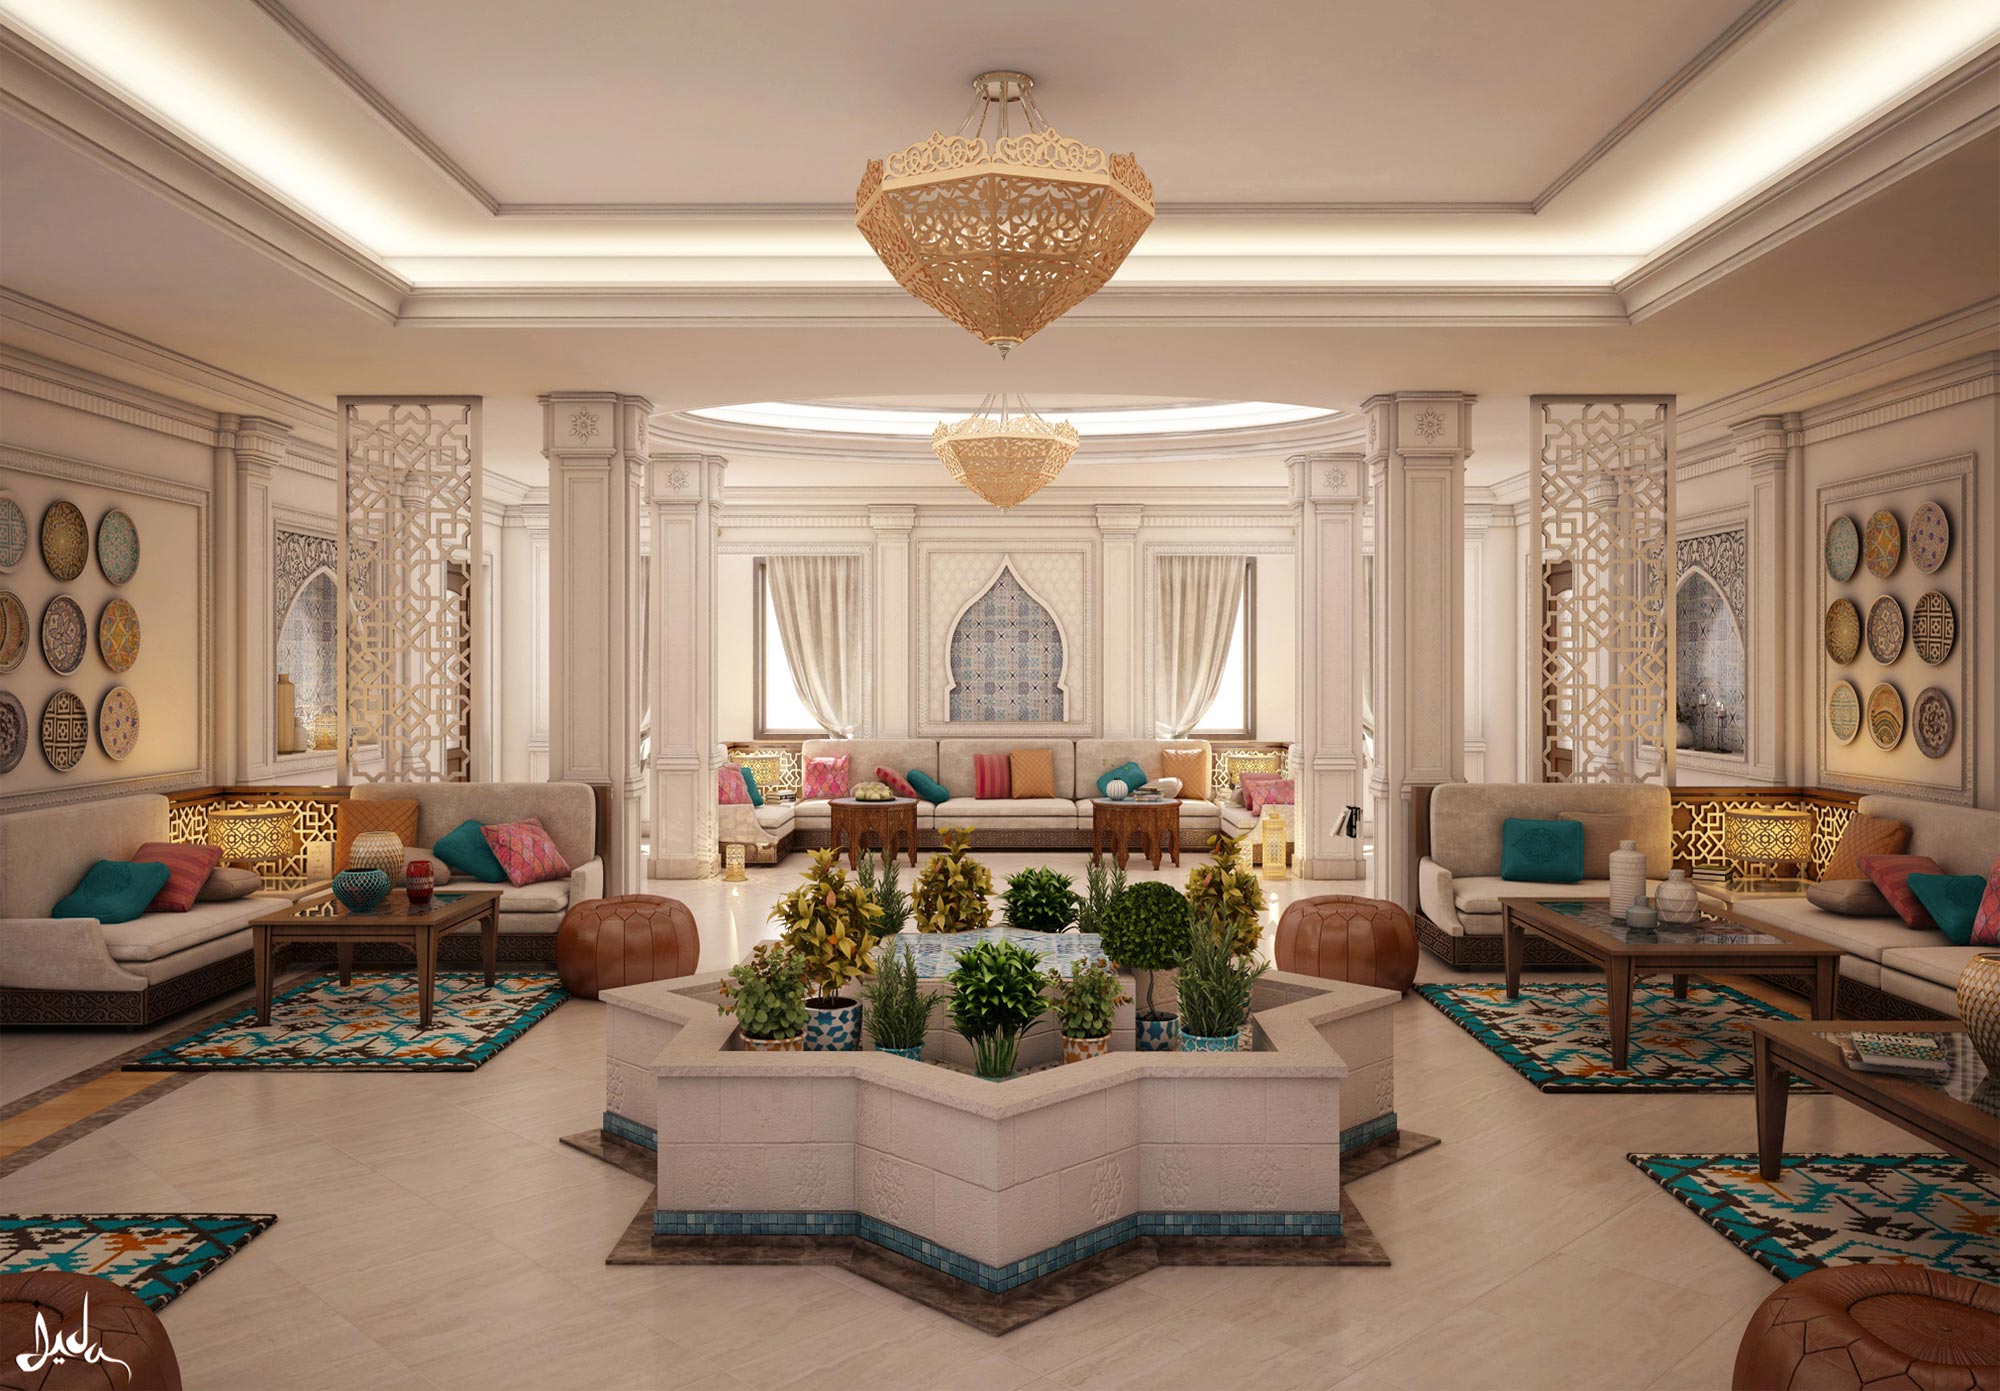 Home - Jeddah Interior Design & Architects